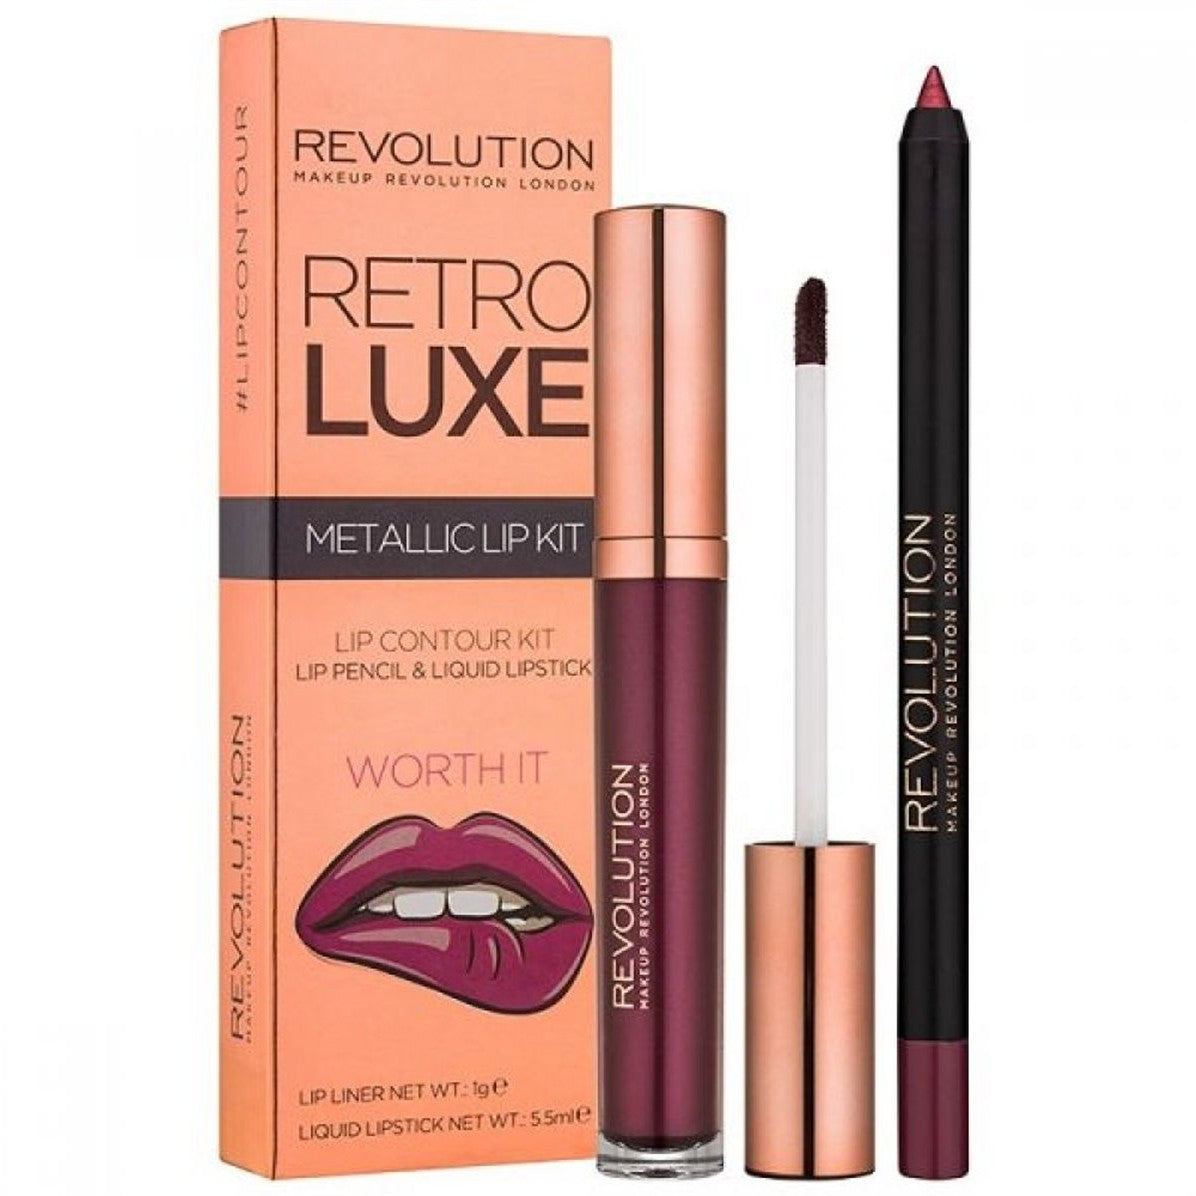 REVOLUTION Retro Luxe Lip Contour Kit - Pencil & Lipstick (Value Pack)